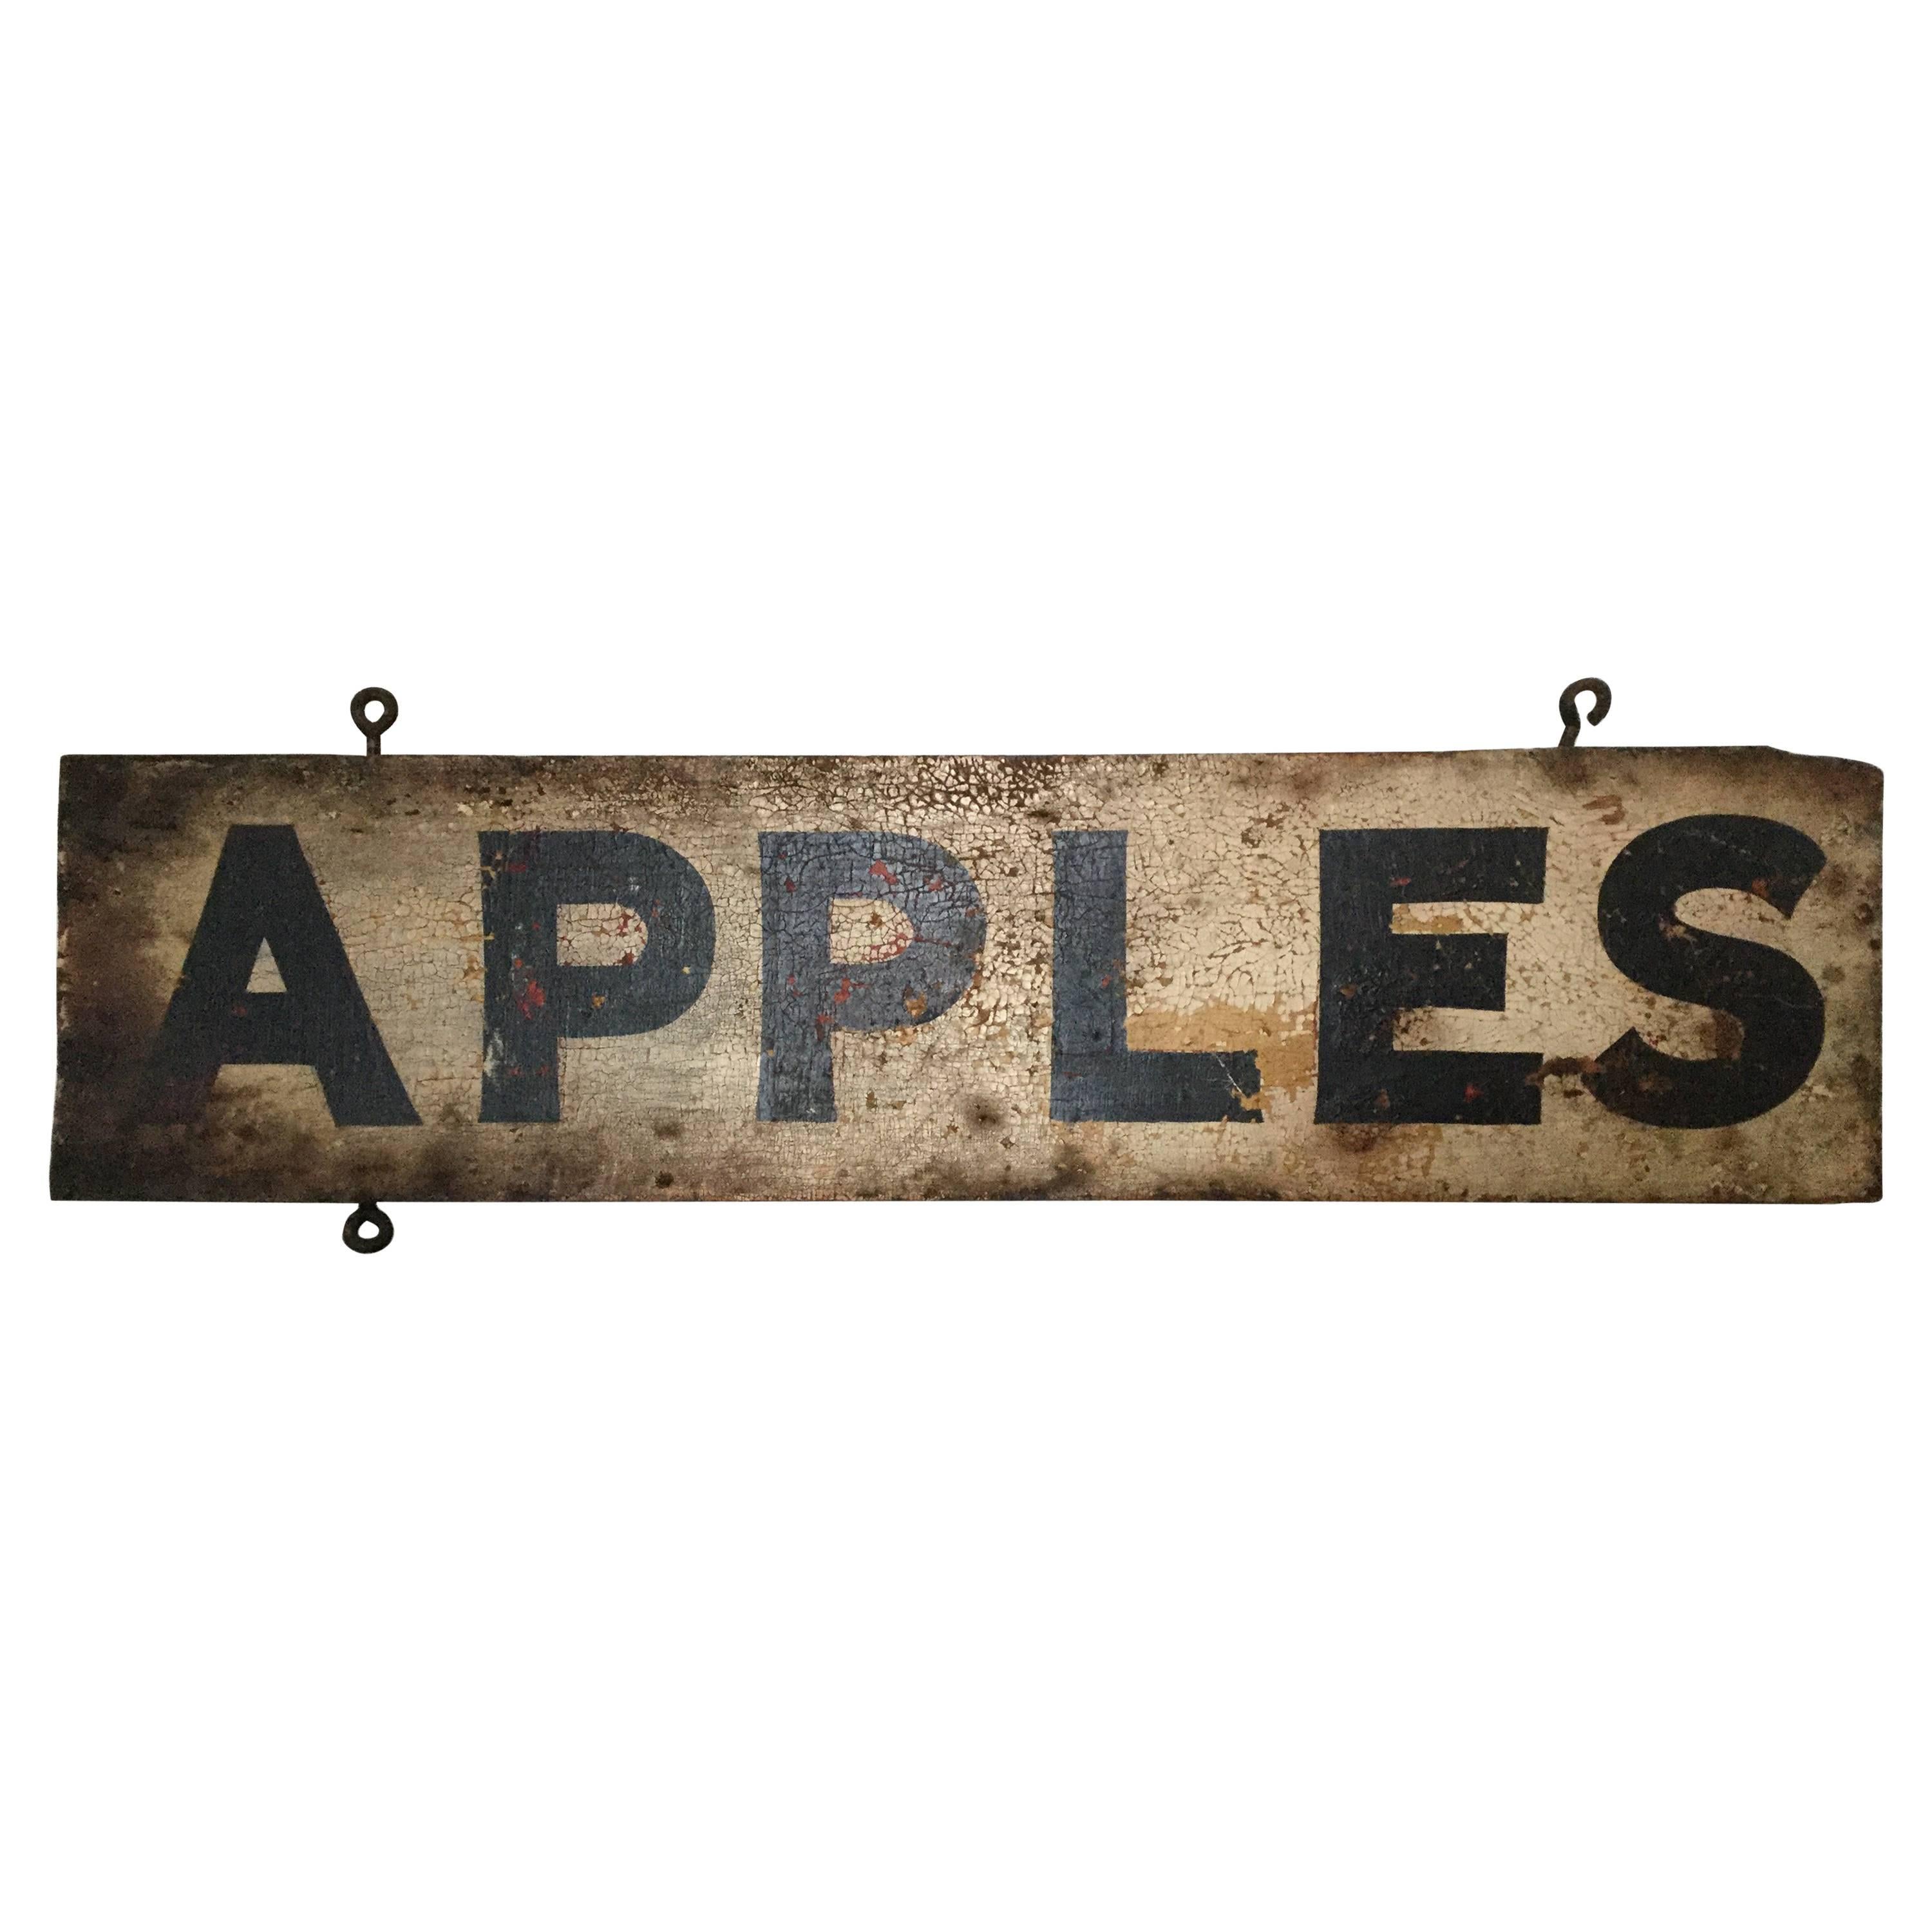 Roadside Sign "Apples", circa 1930